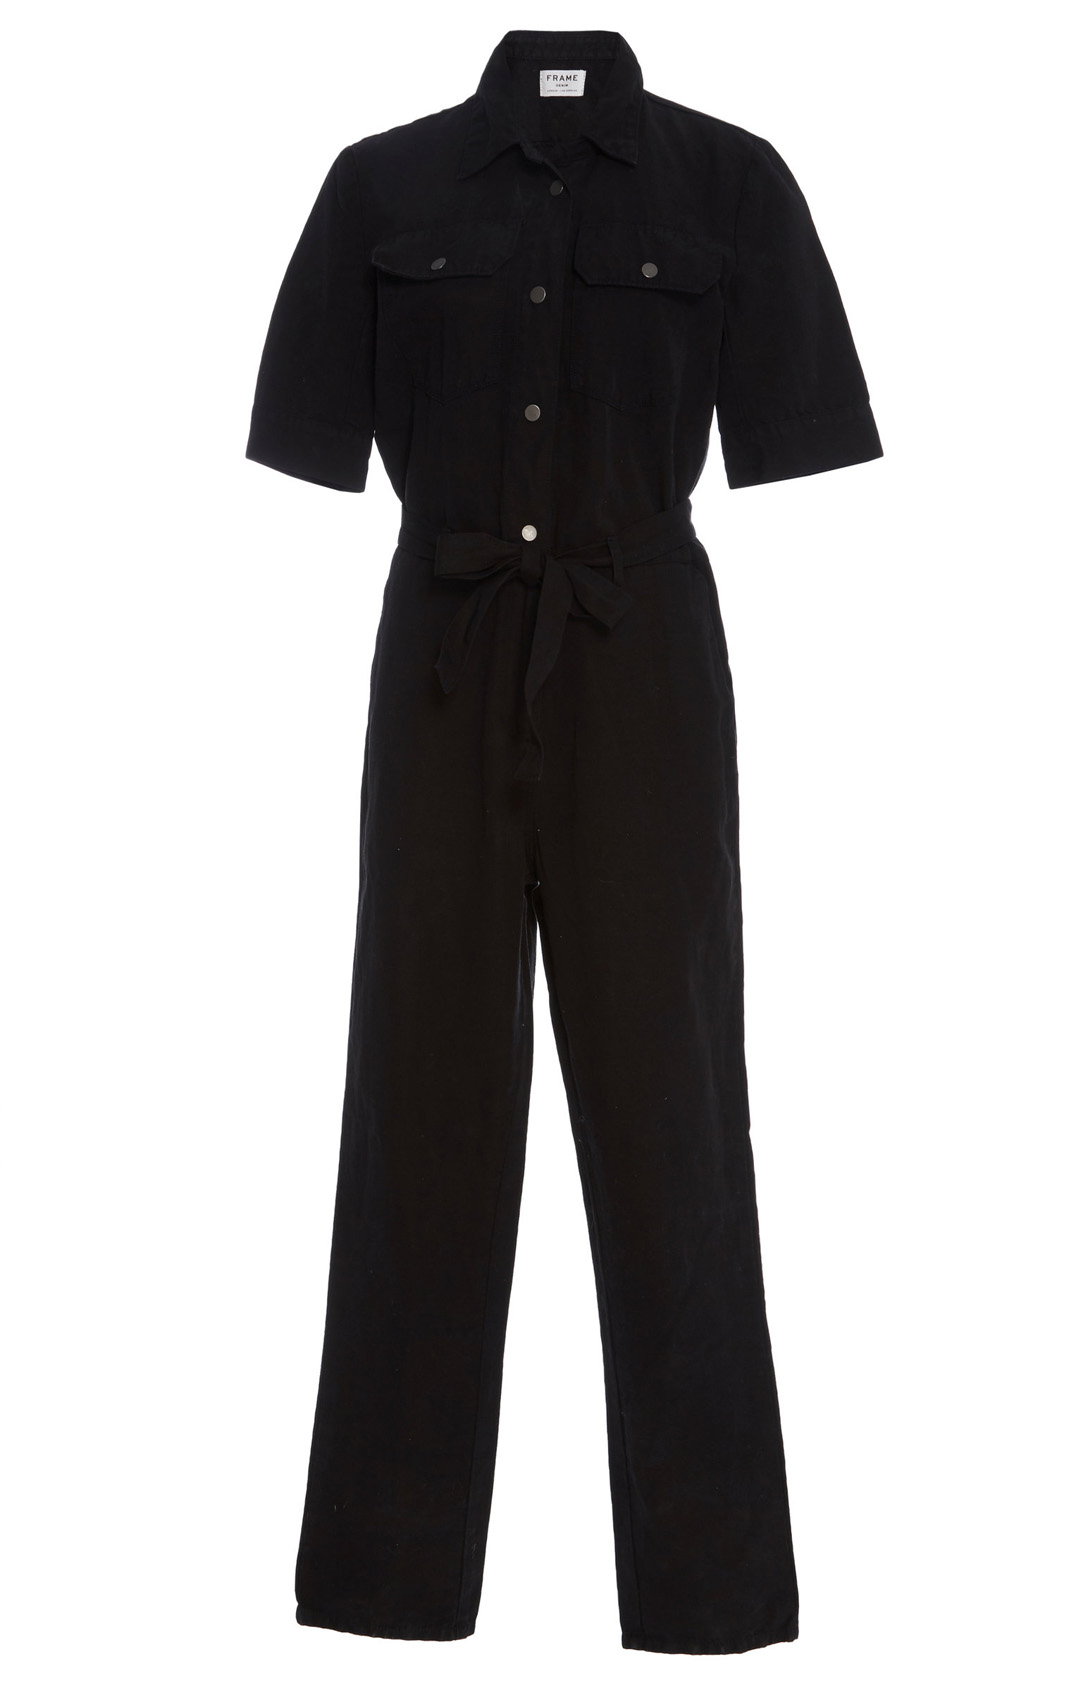 Frame Denim Belted Jumpsuit, $330 USD from Moda Operandi